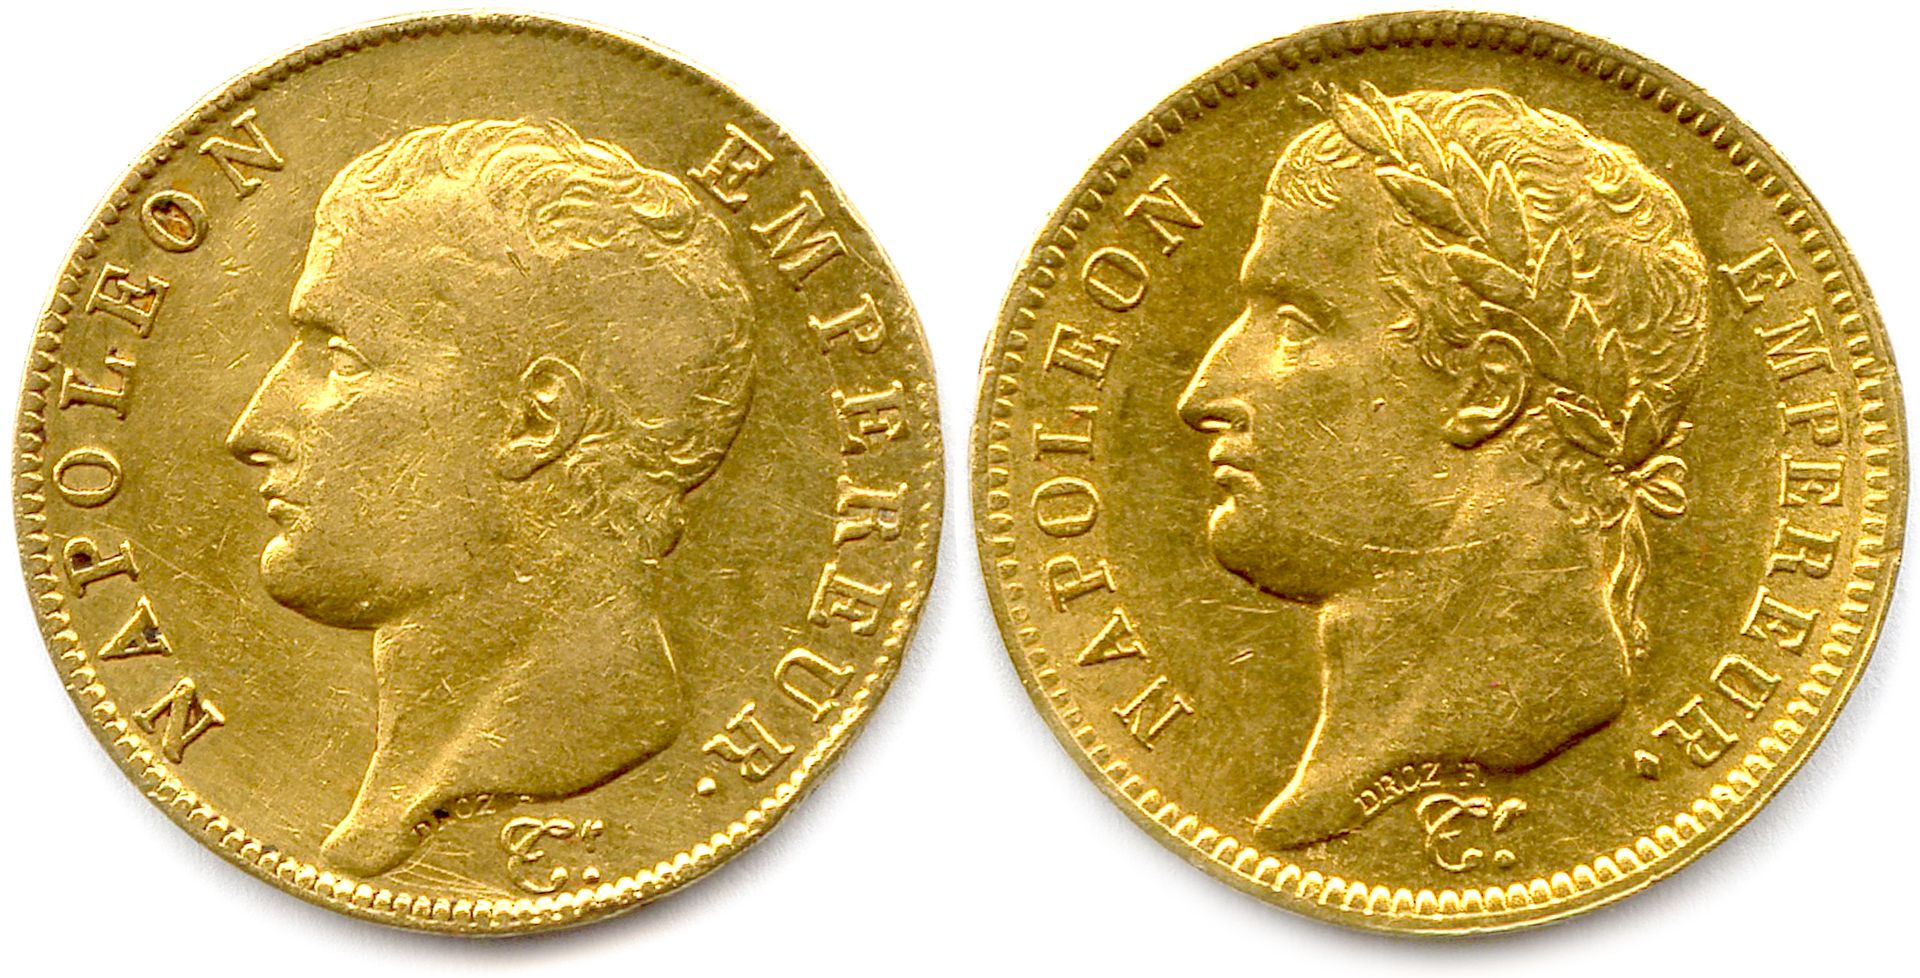 Null NAPOLÄON I. 18. Mai 1804 - 6. April 1814 193

2 Goldmünzen: 

40 Francs (Ré&hellip;